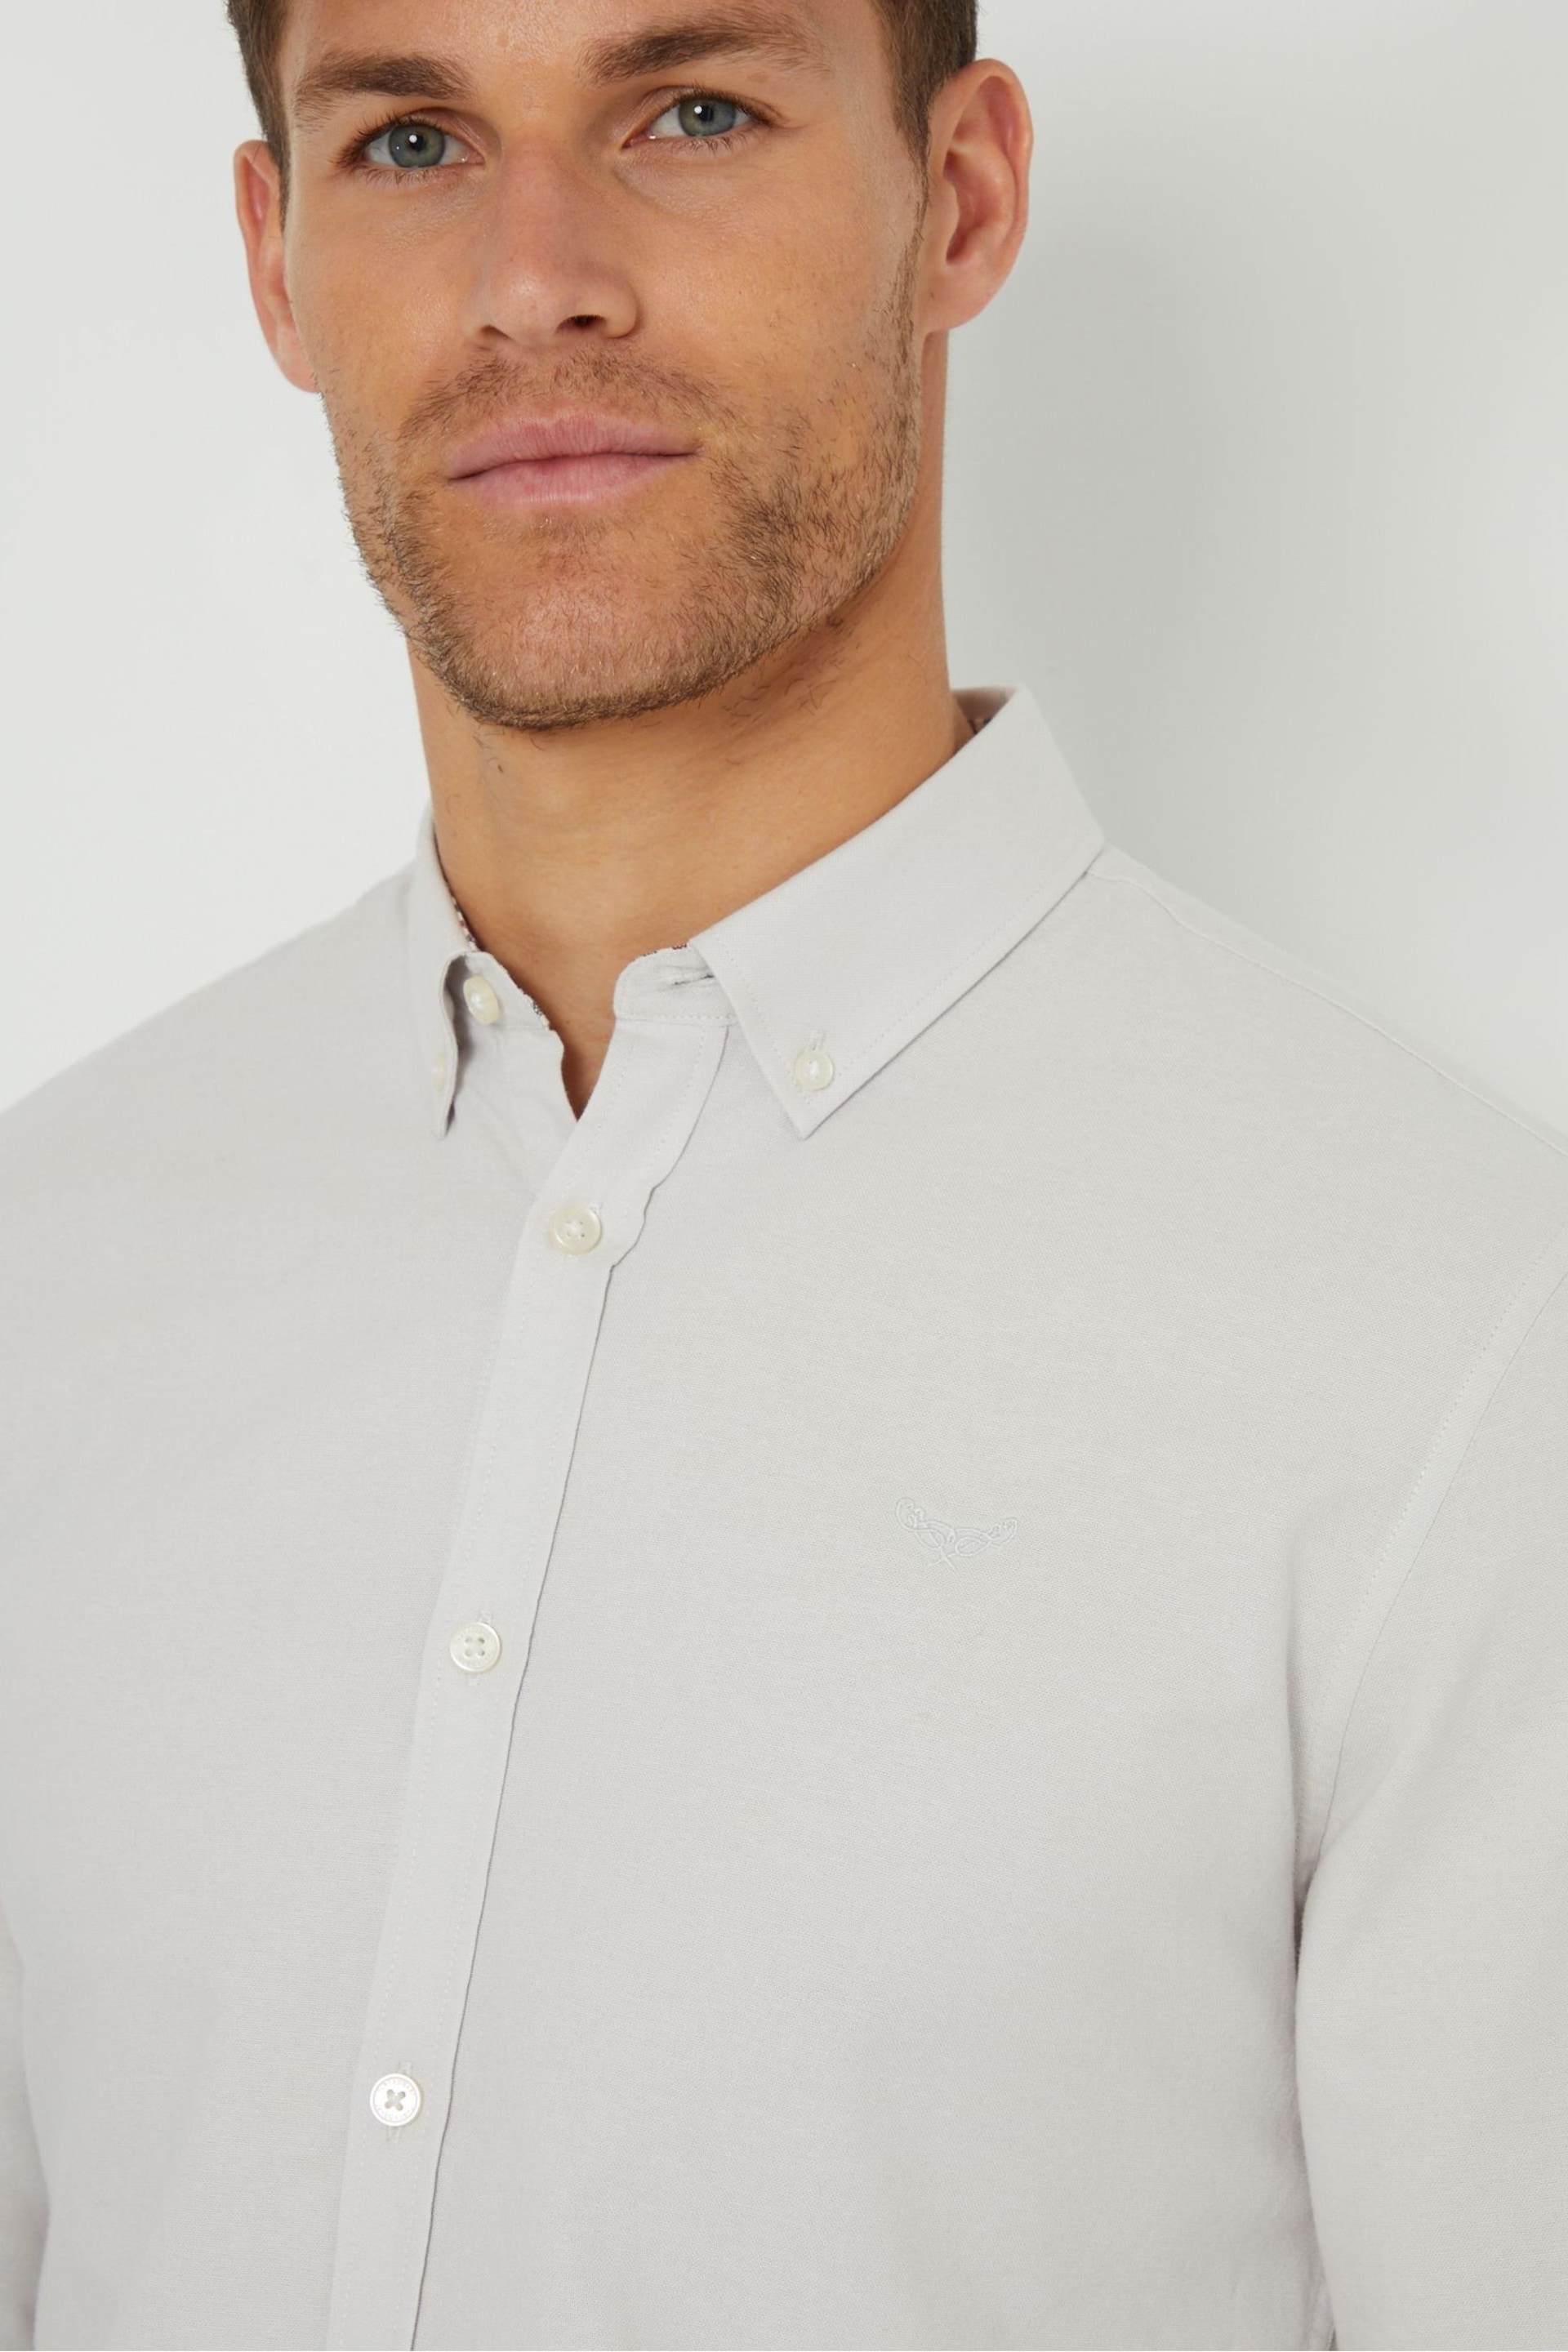 Threadbare Ecru Oxford Cotton Long Sleeve Shirt - Image 4 of 5